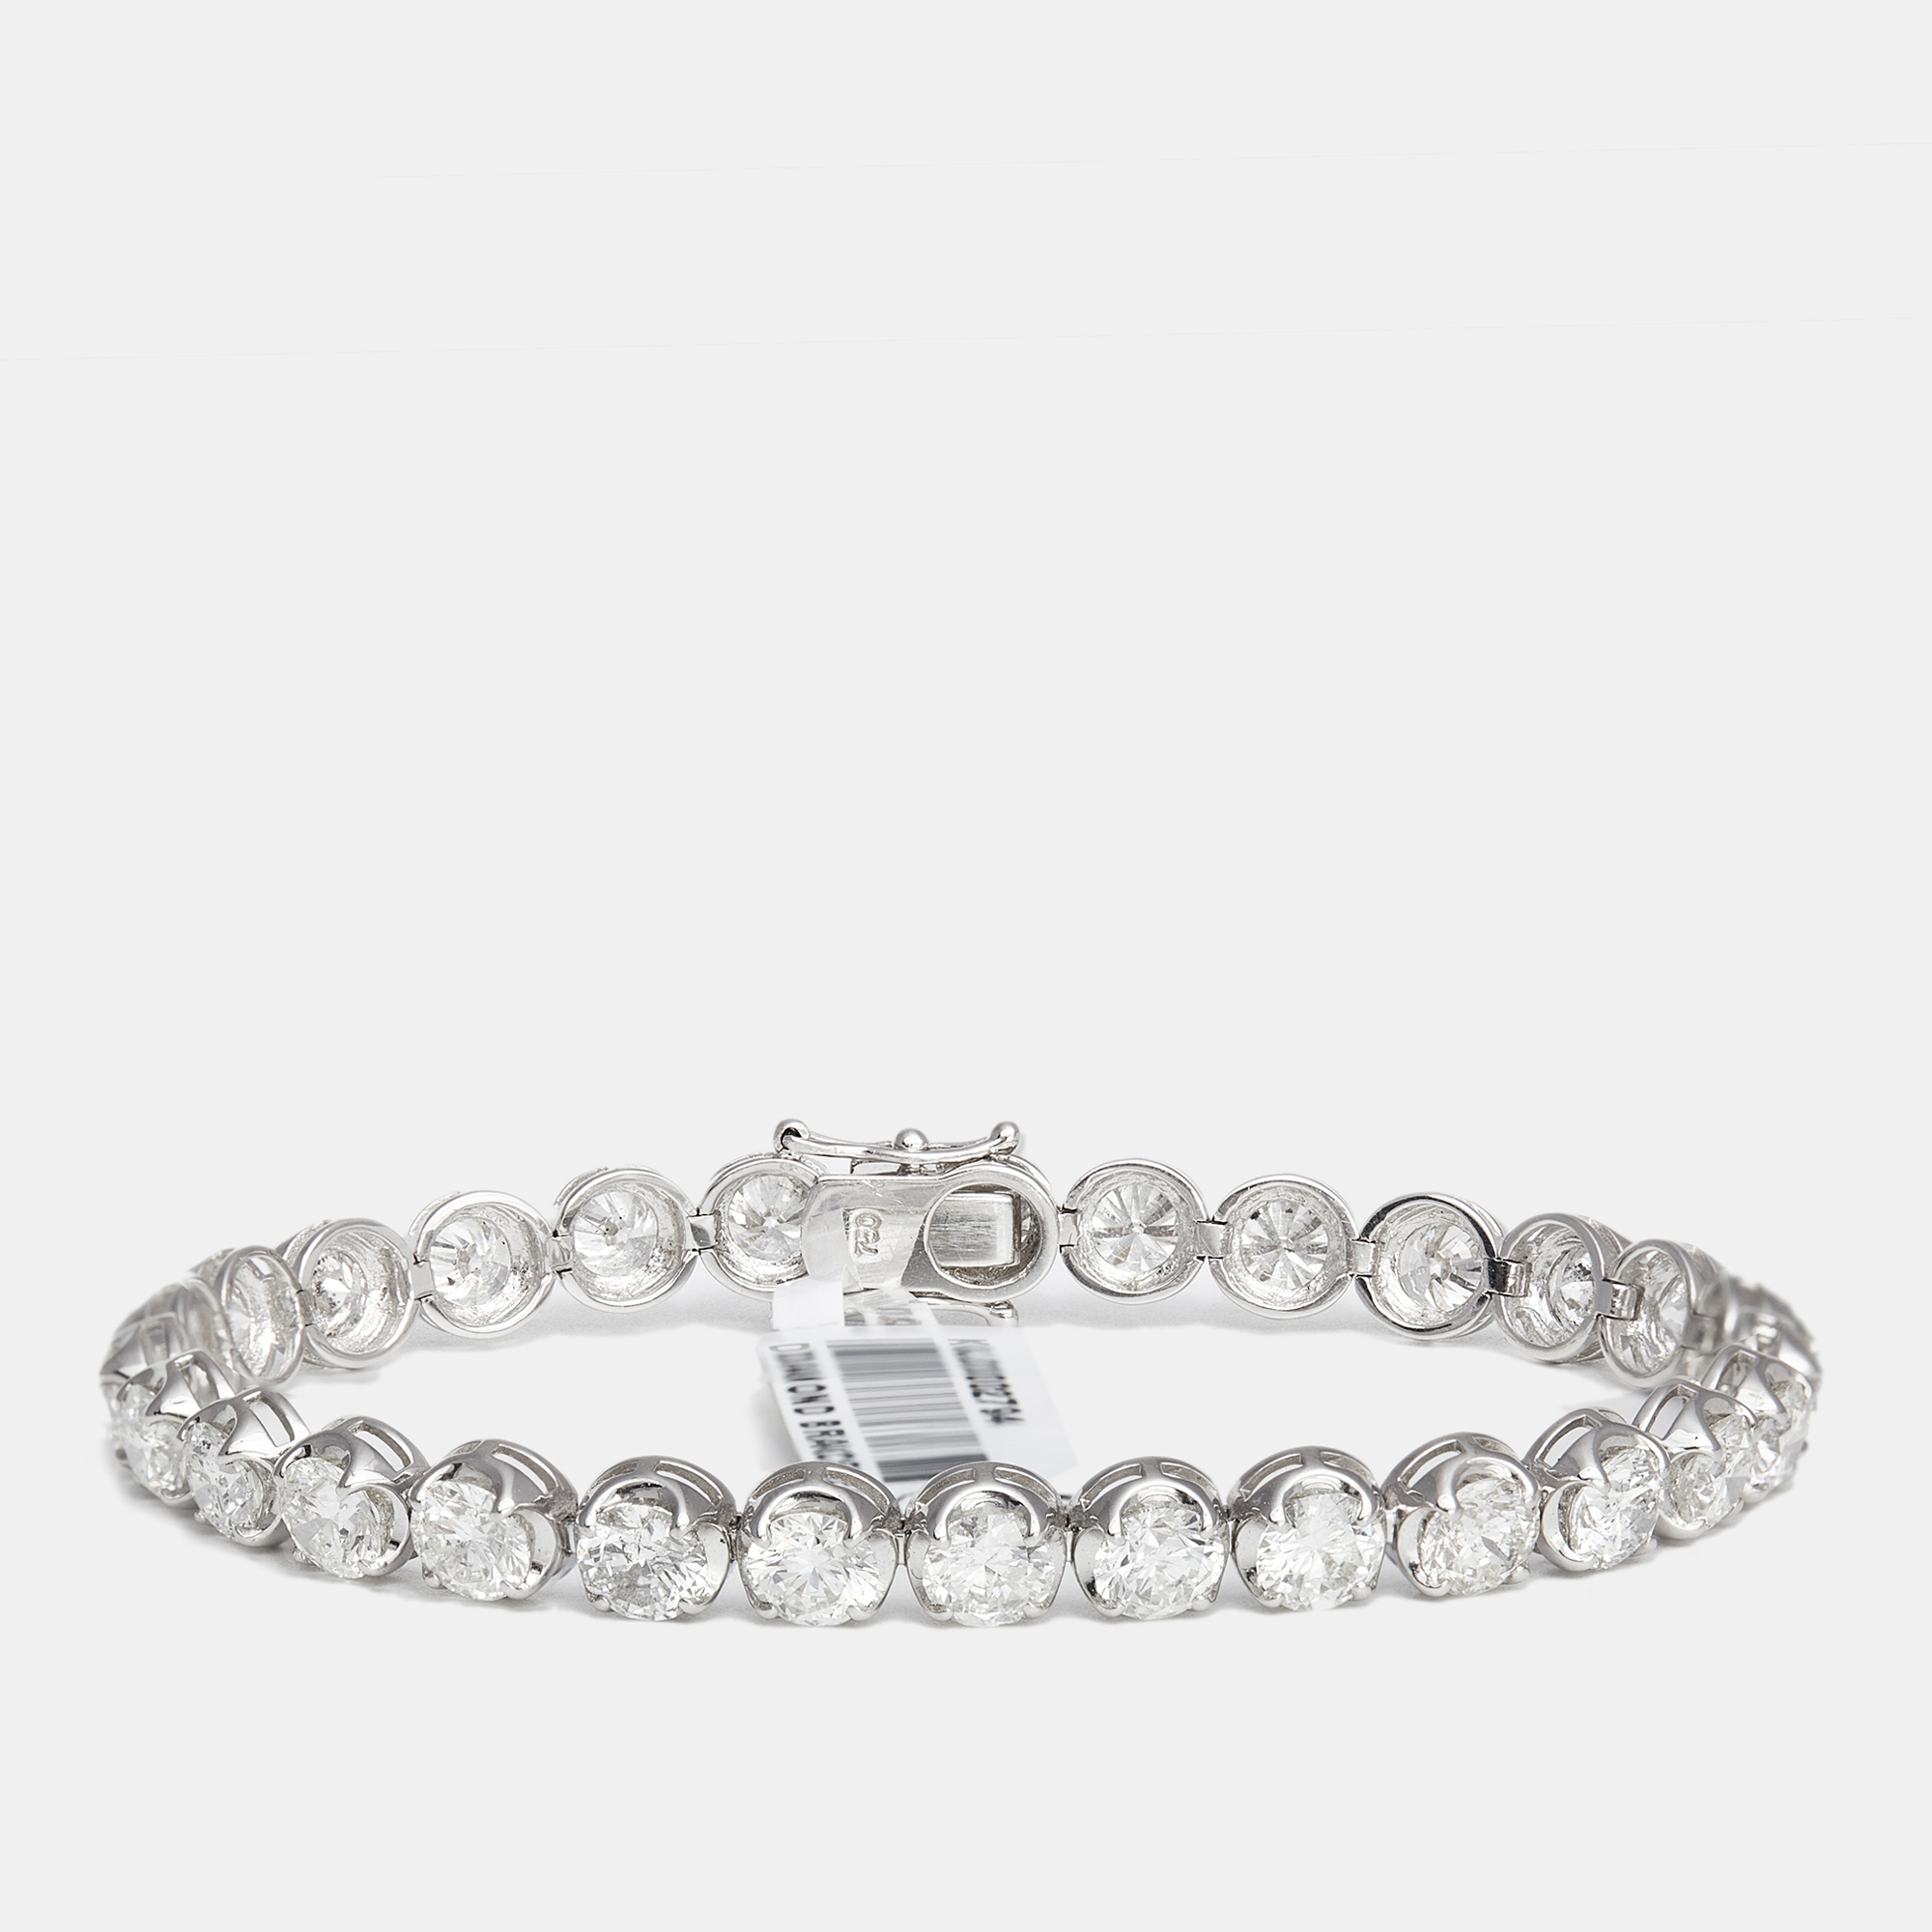 The diamond edit 18k white gold diamonds 14.66 cts elegant tennis bracelet